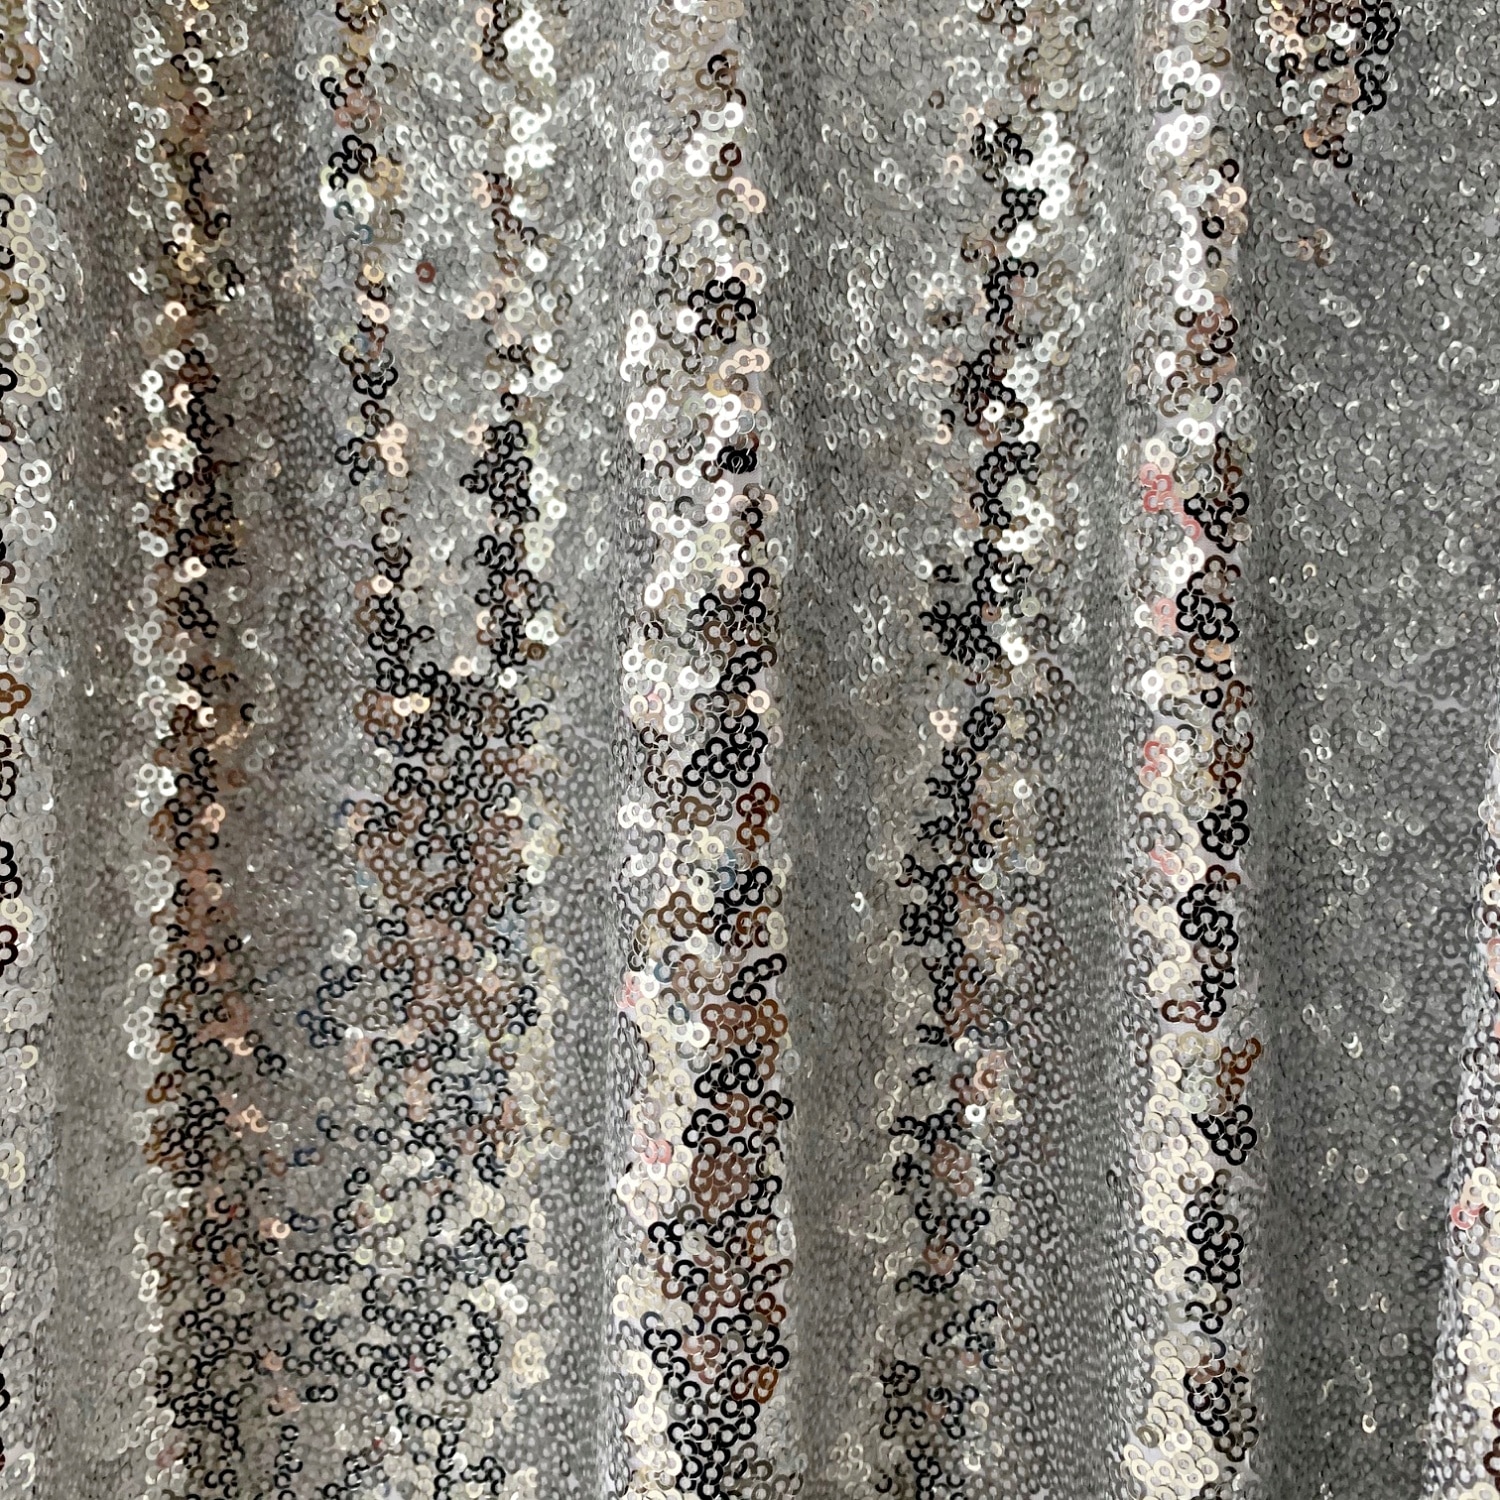 Solid Stone Fabrics